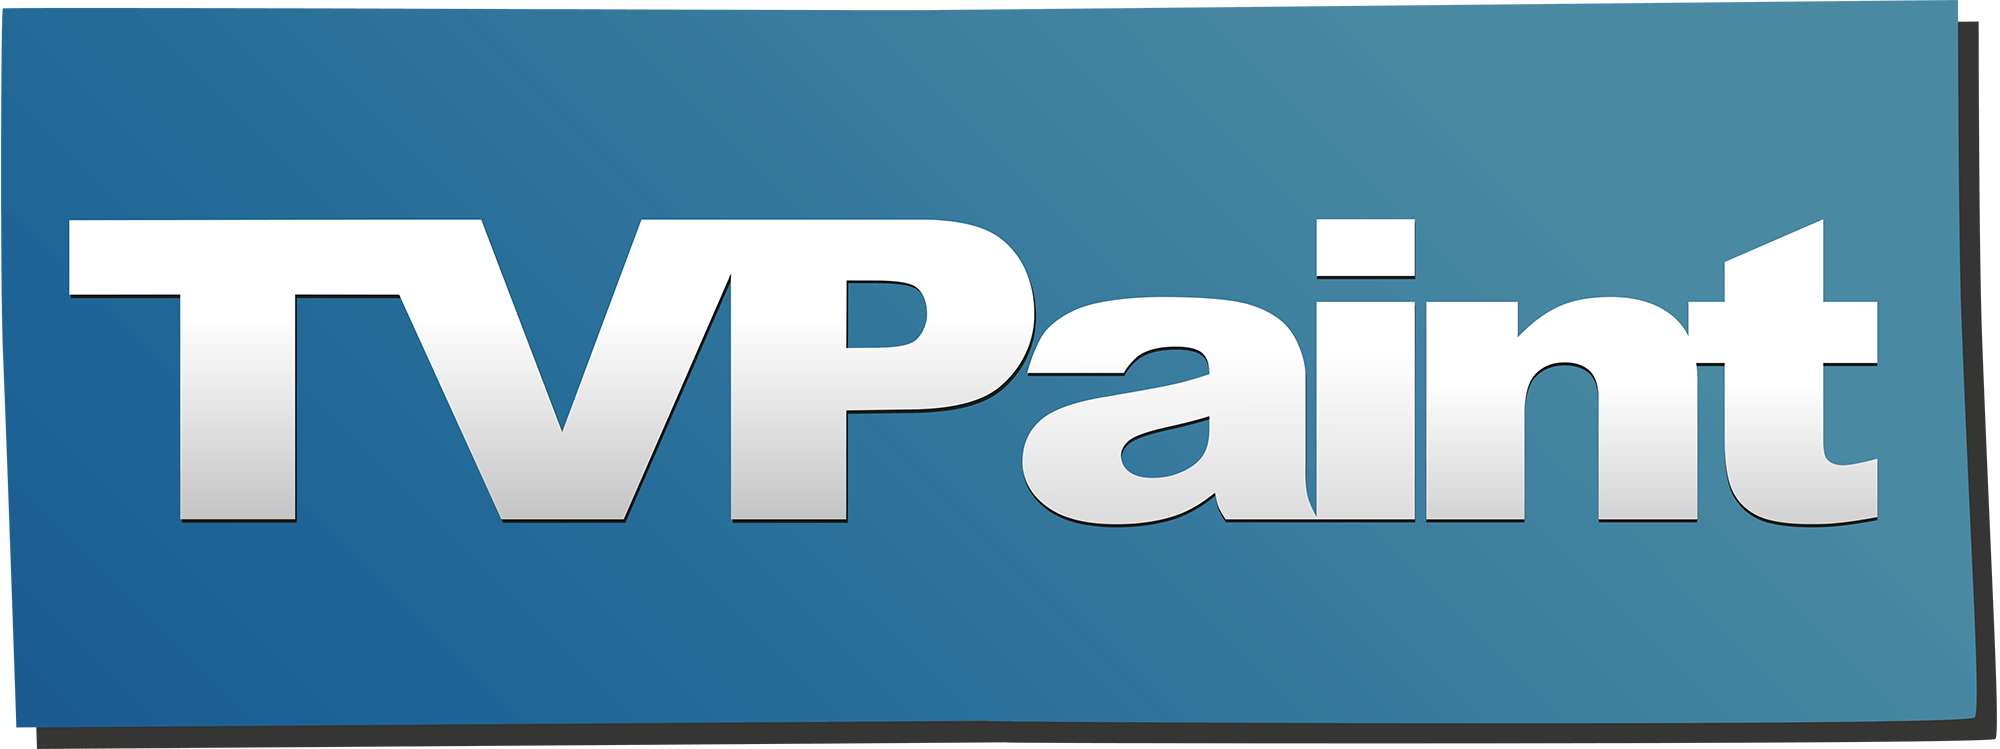 TVPaint_logo_VECTORIEL_GRAND (1).png